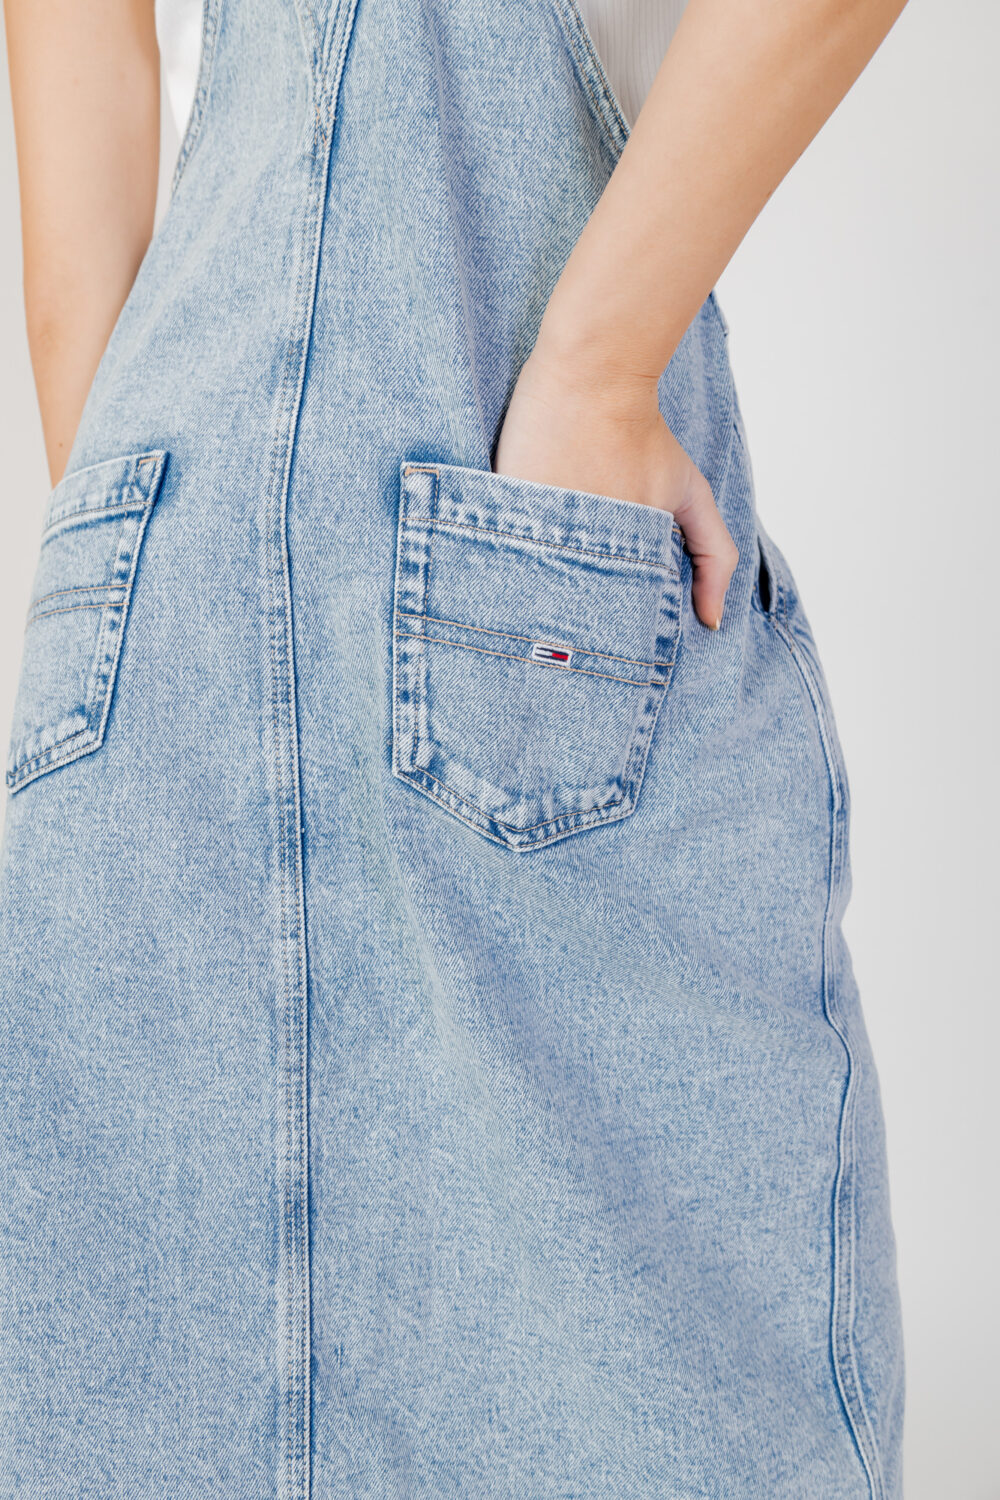 Tutina Tommy Hilfiger Jeans dungaree bf midi Denim chiaro - Foto 4